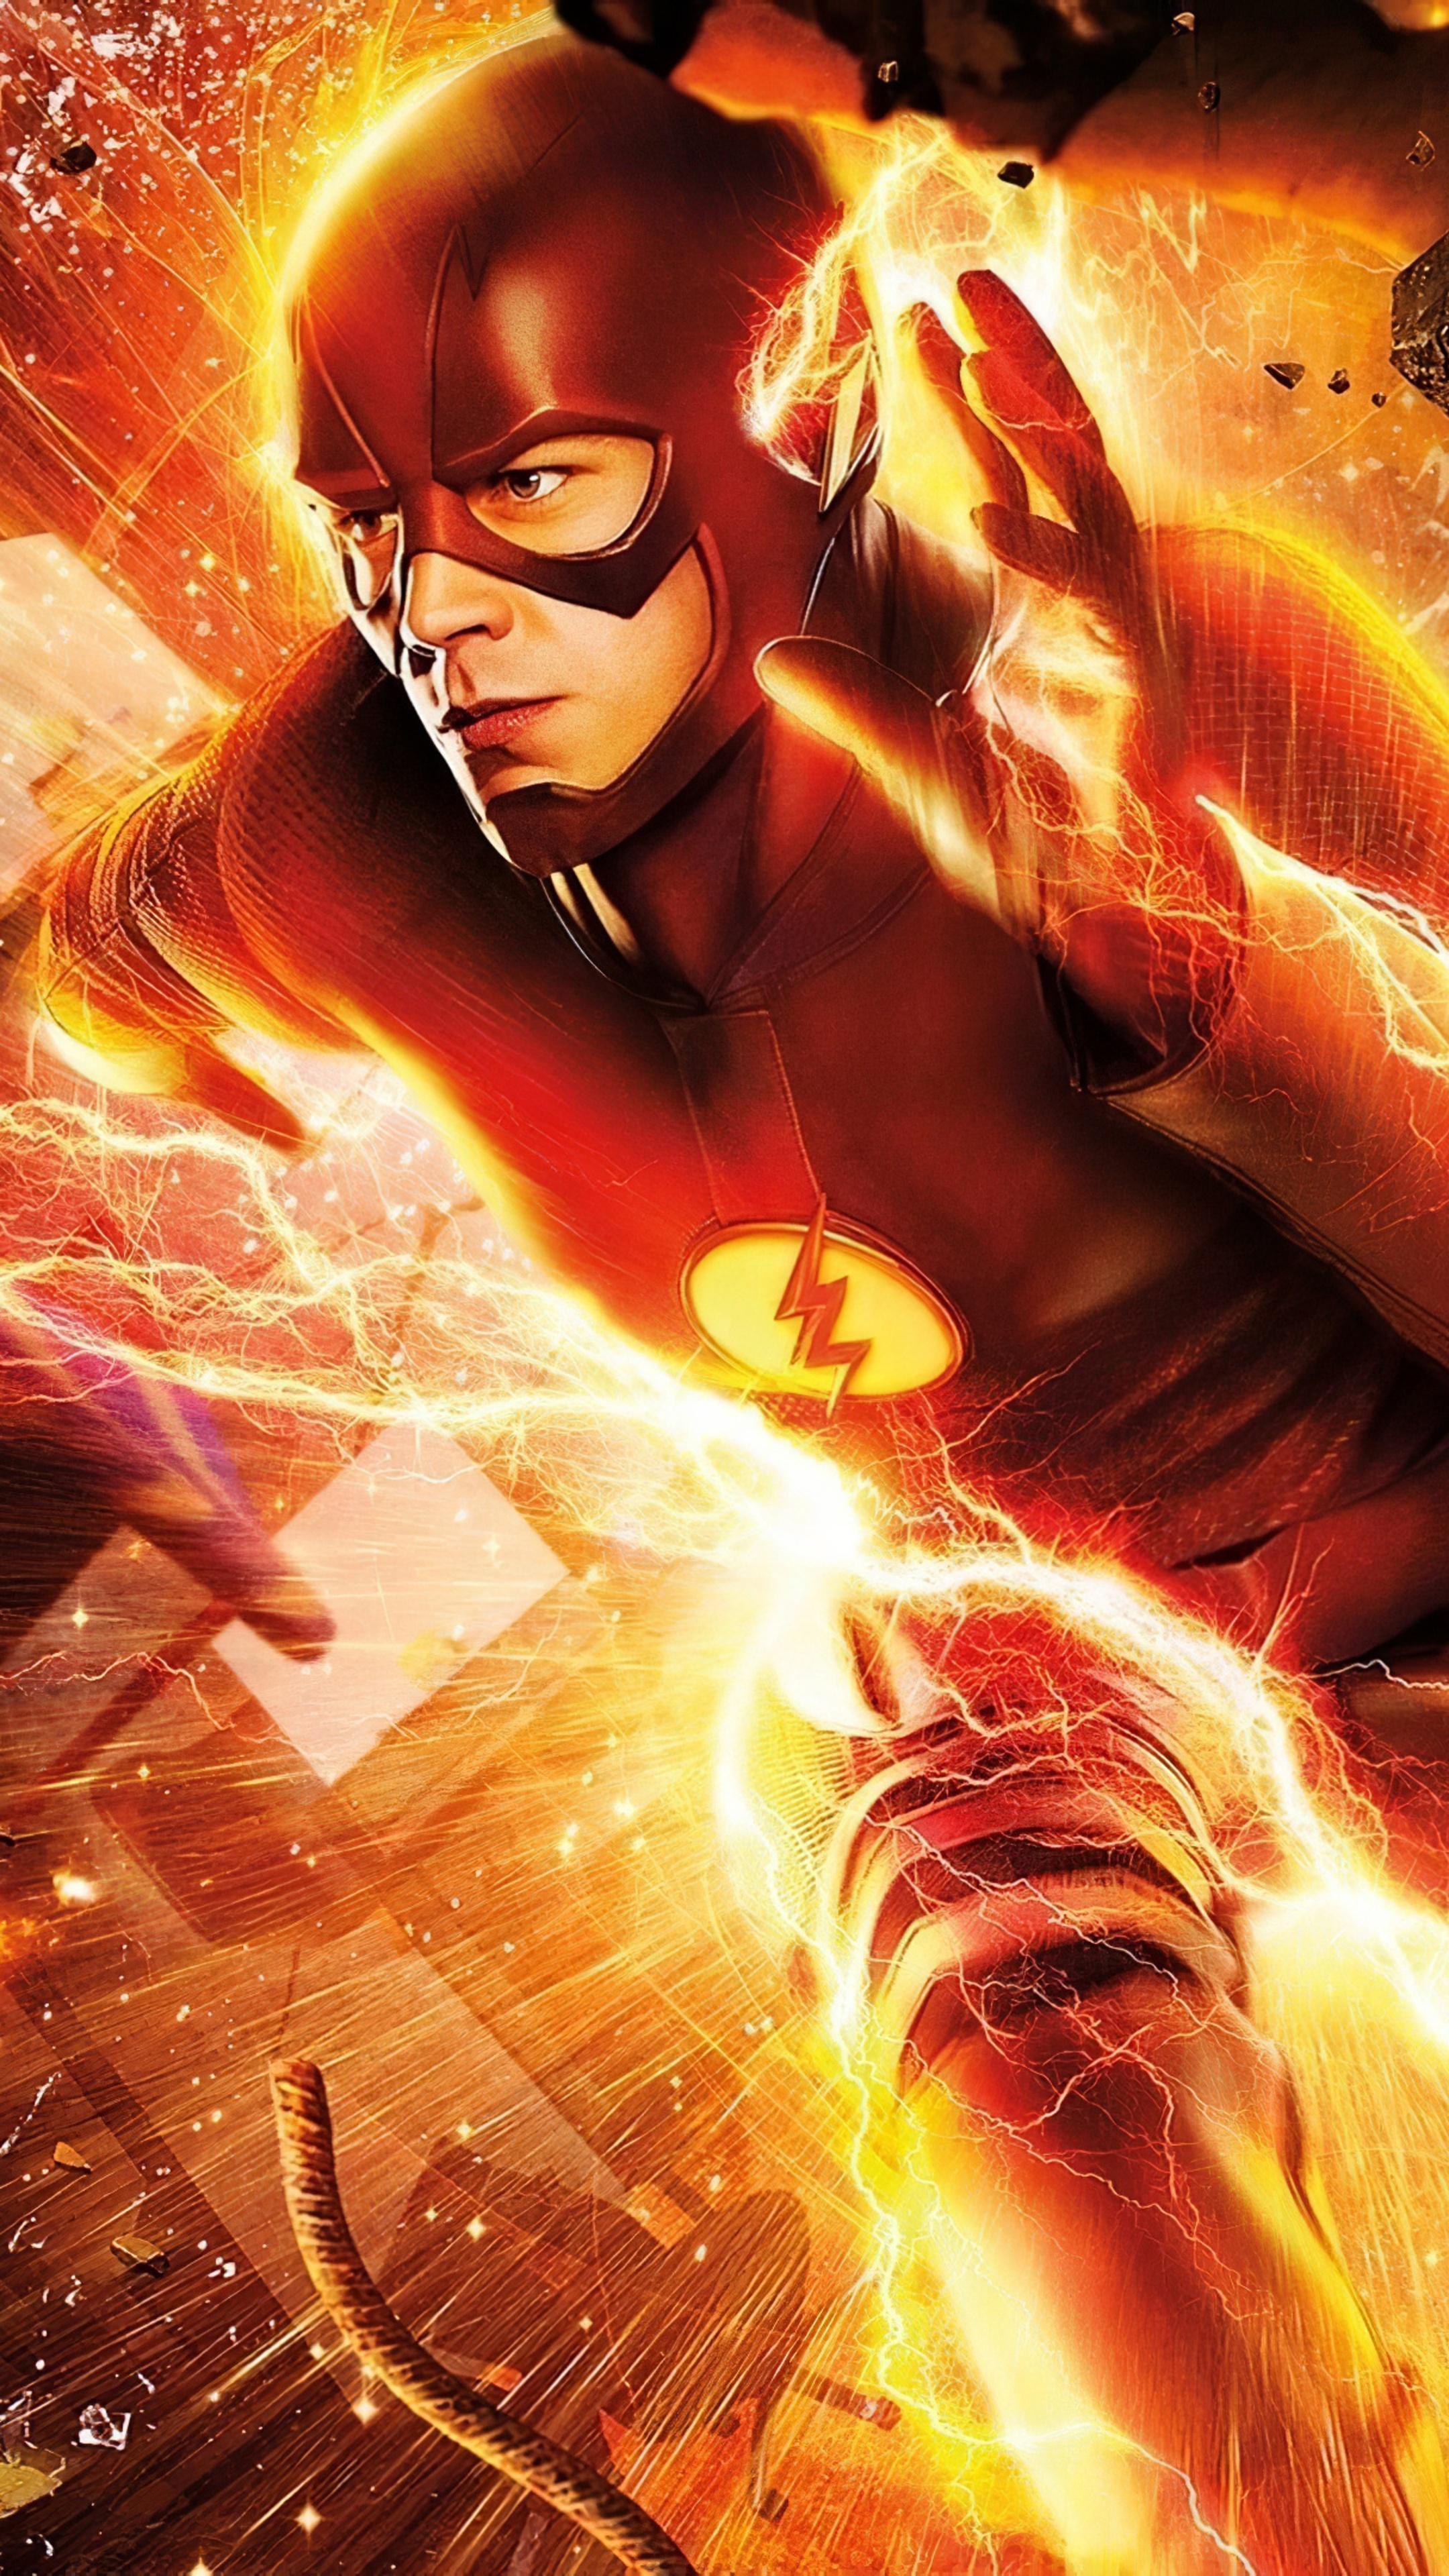 HD wallpaper, The Flash, Barry Allen, Hd, Flash, 4K, Tv Shows, Super Heroes